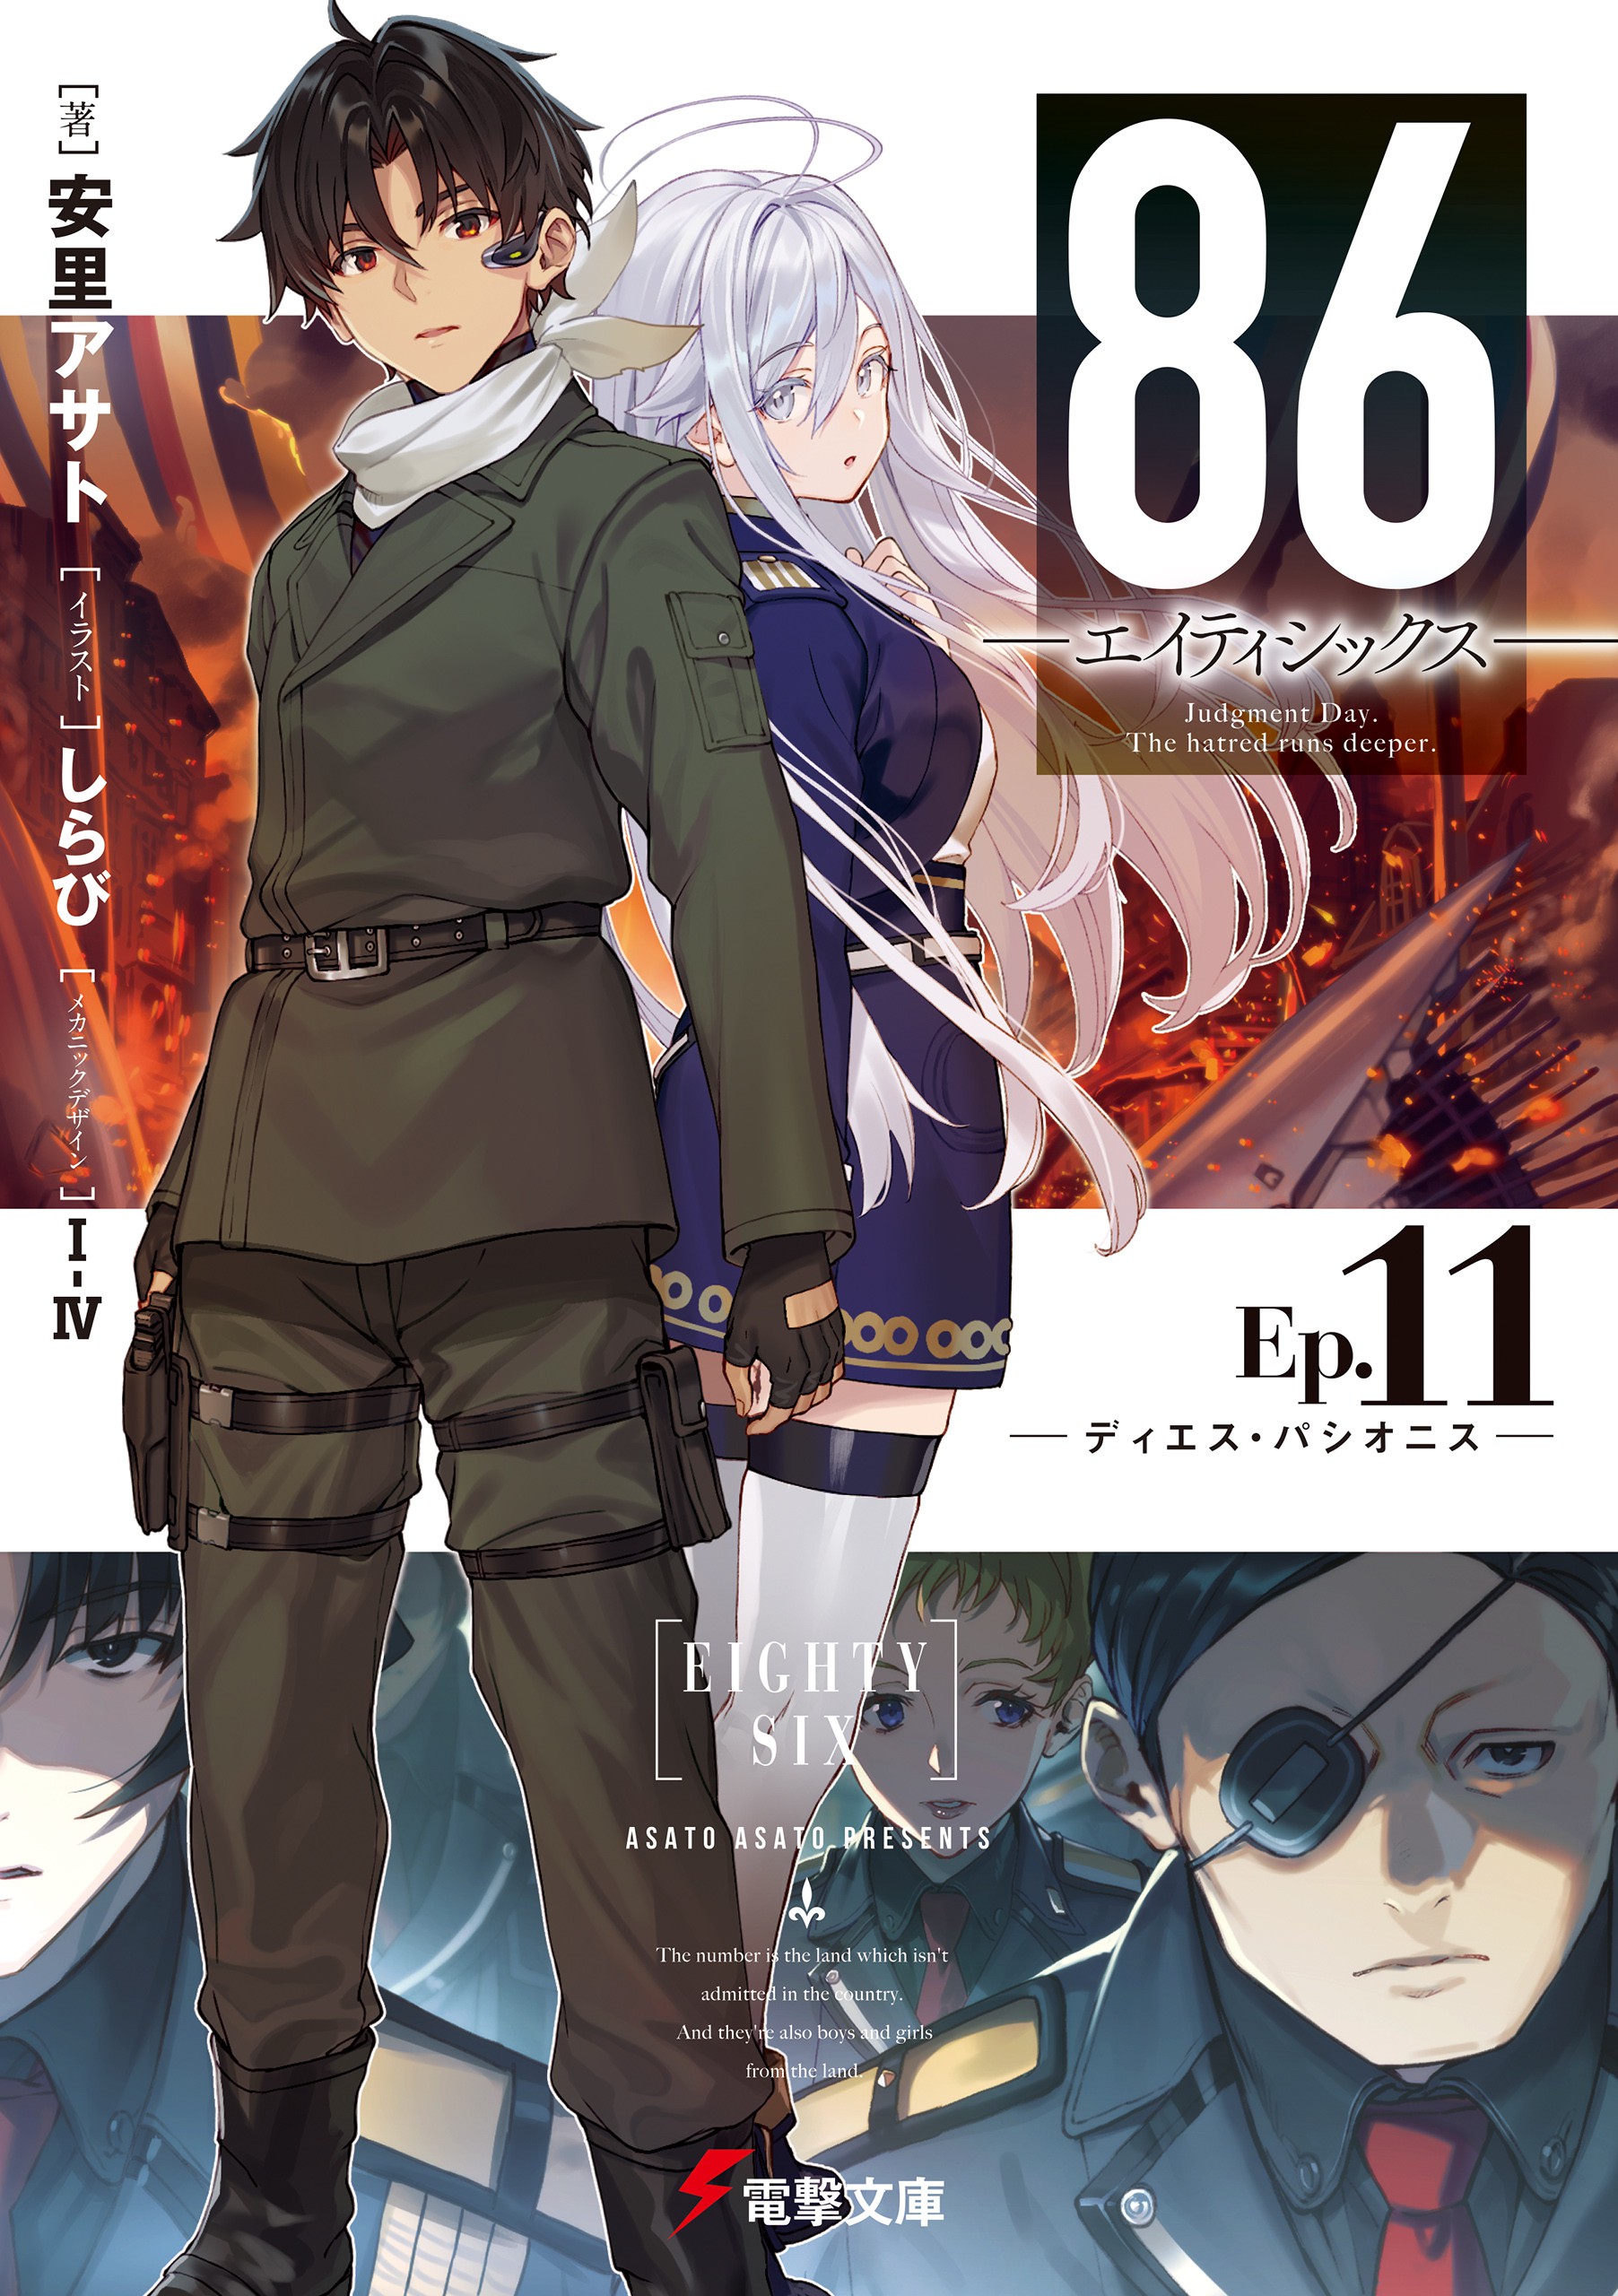 Light Novel Volume 11 | 86 - Eighty Six - Wiki | Fandom